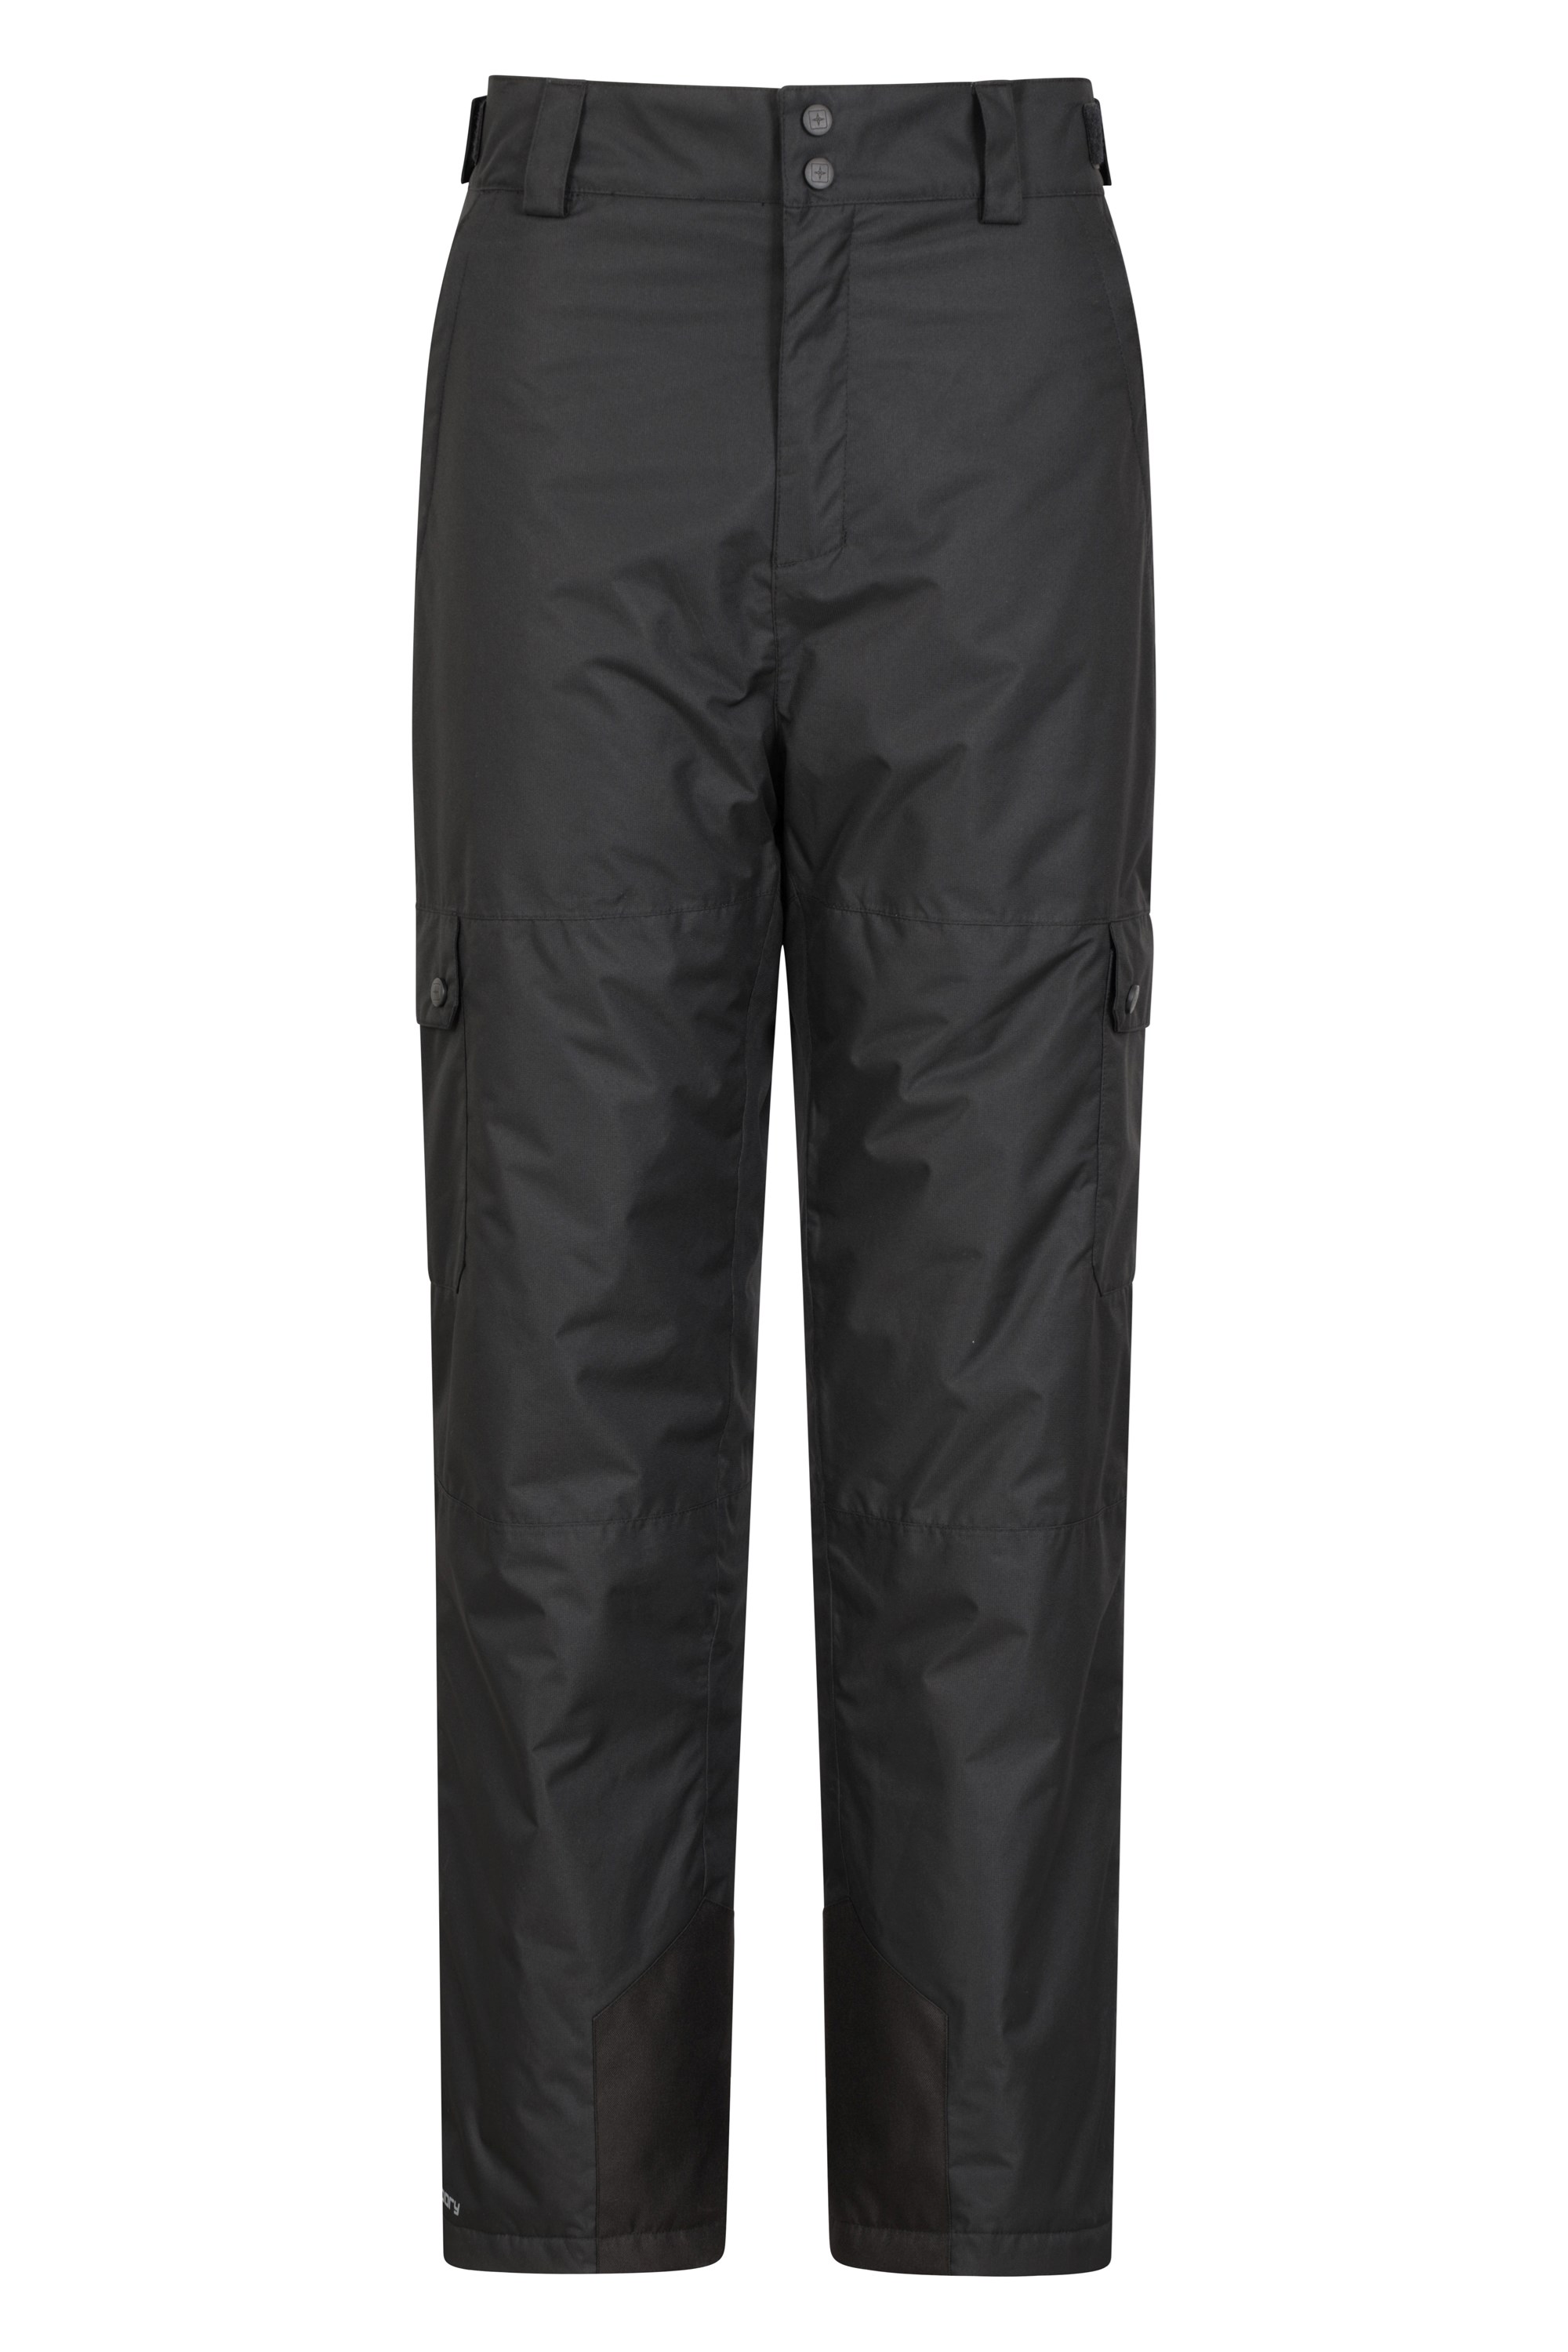 Titan Mens Snowboard Pants - Short Length - Black